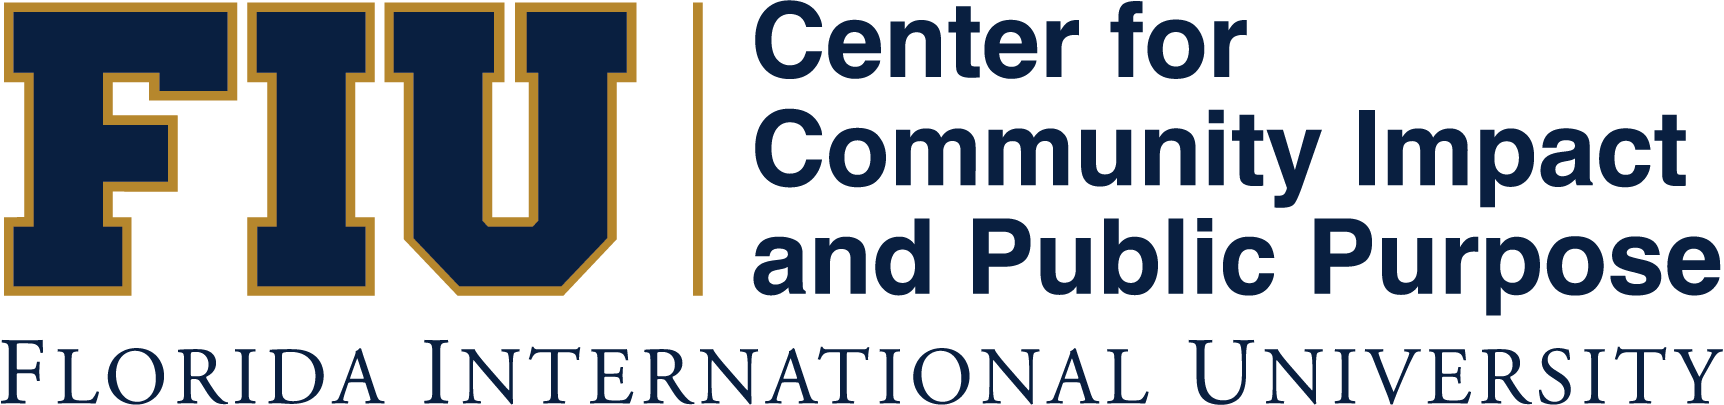 Center for Community Impact and Public Purpose